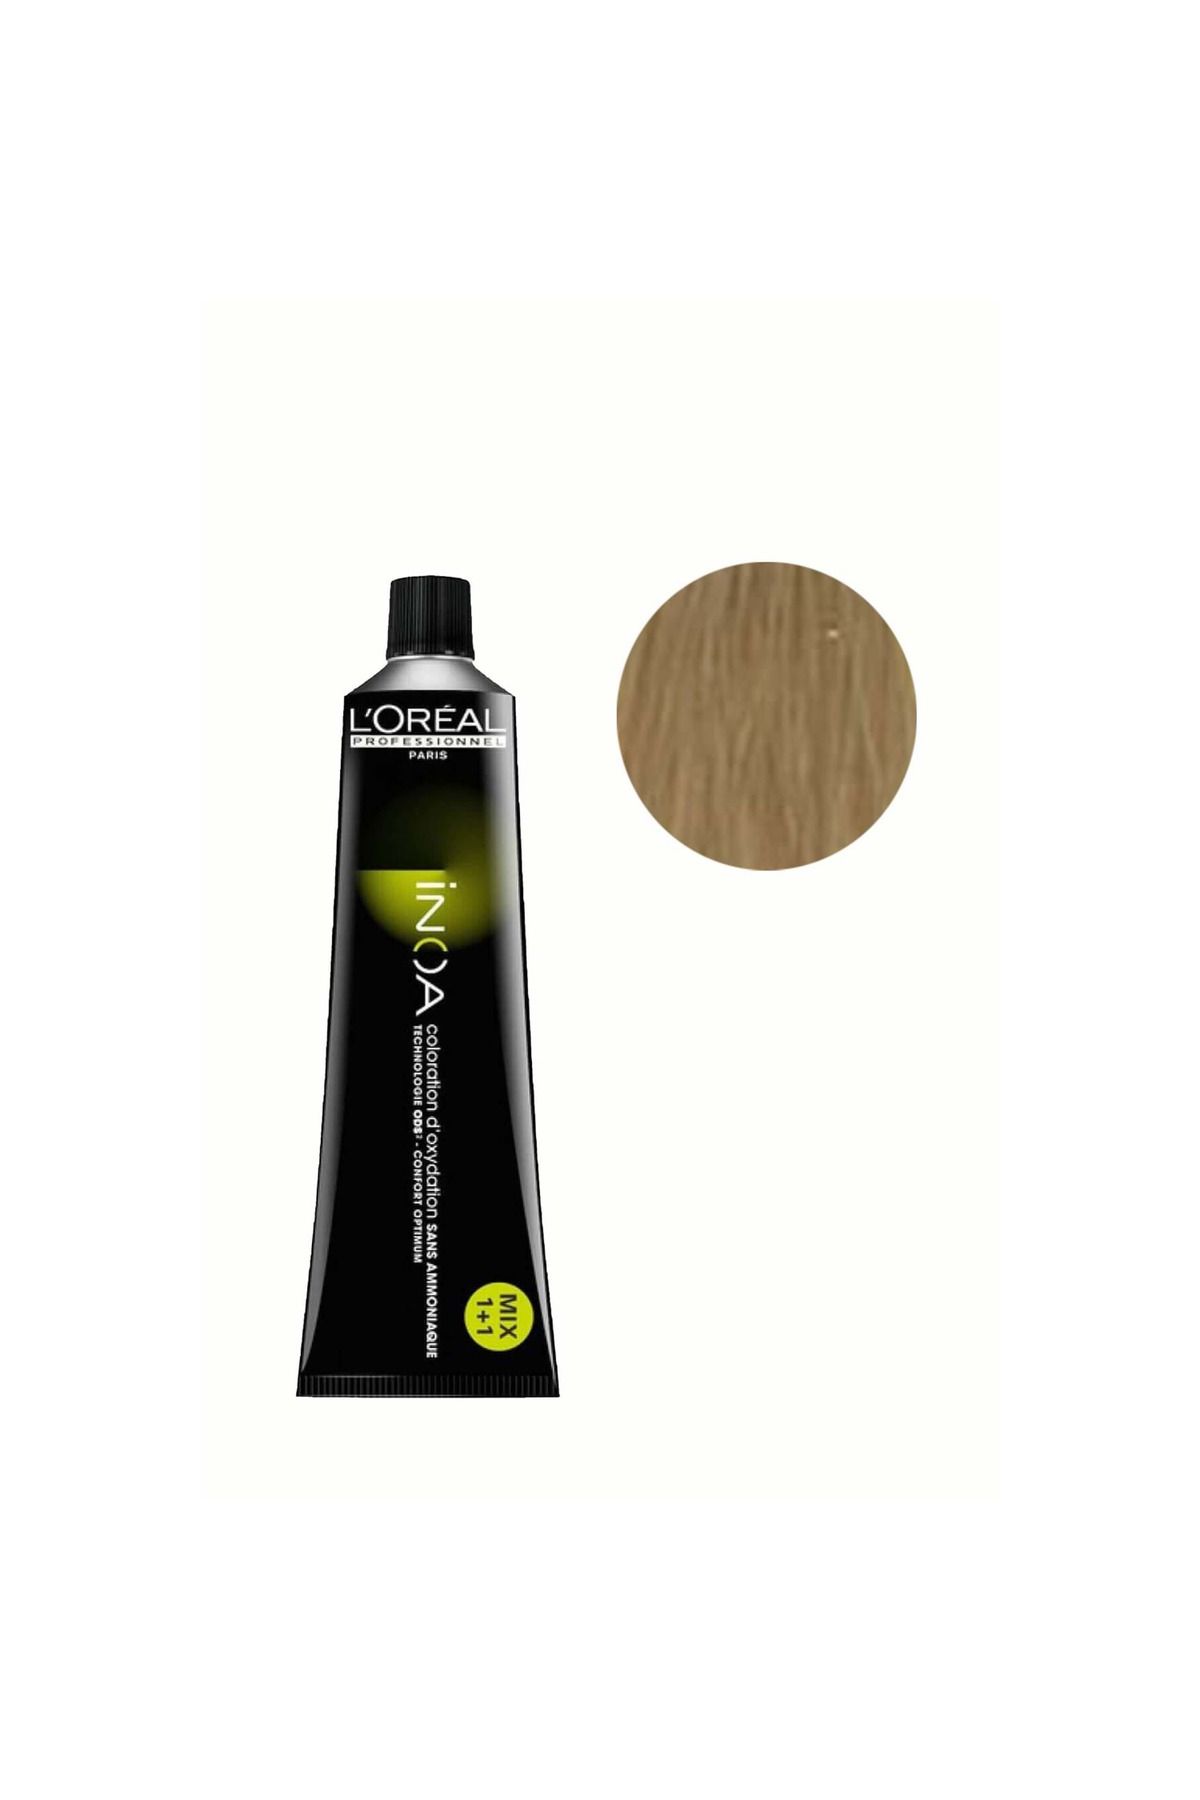 L'oreal Professionnel Inoa 10 Natural Light Blonde Defined Ammonia Free Permament Hair Color Cream 60ml Keyk.*